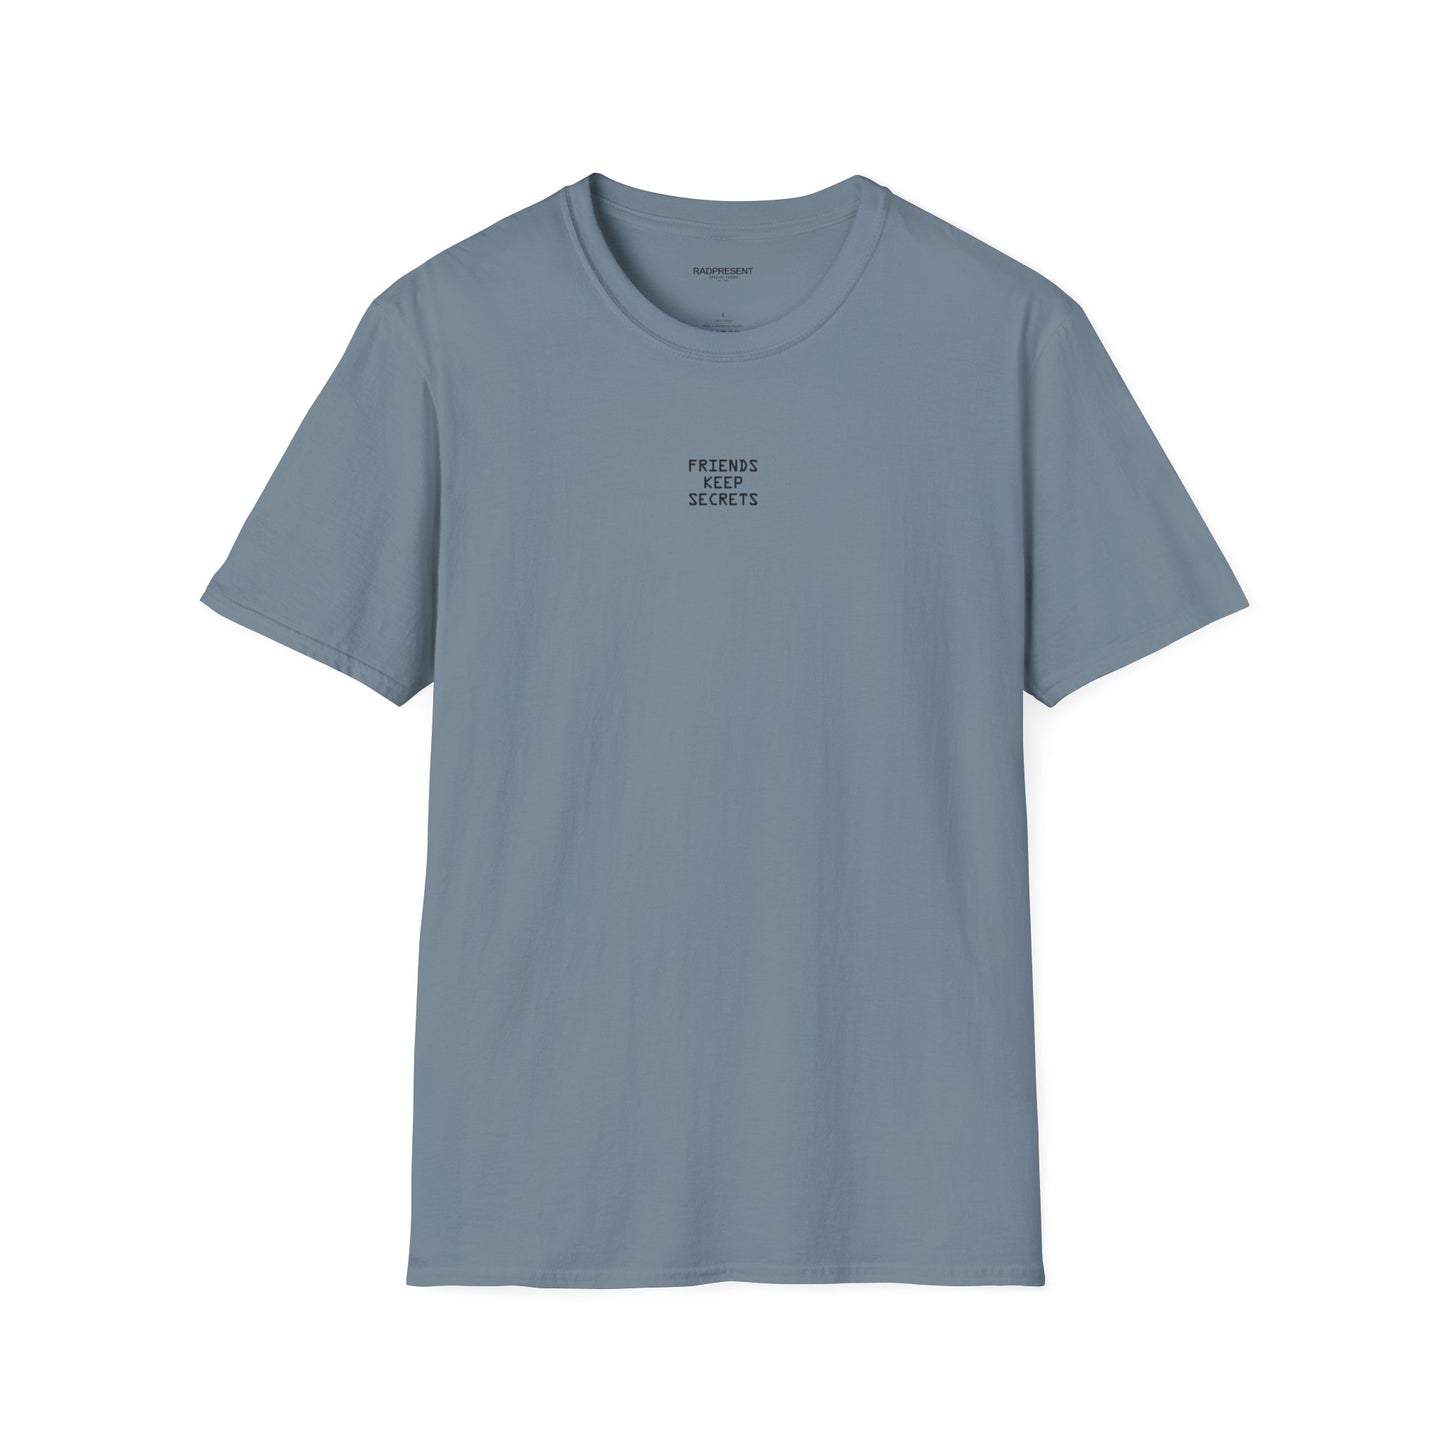 'Friends Keep Secrets' Unifit Softstyle T-Shirt